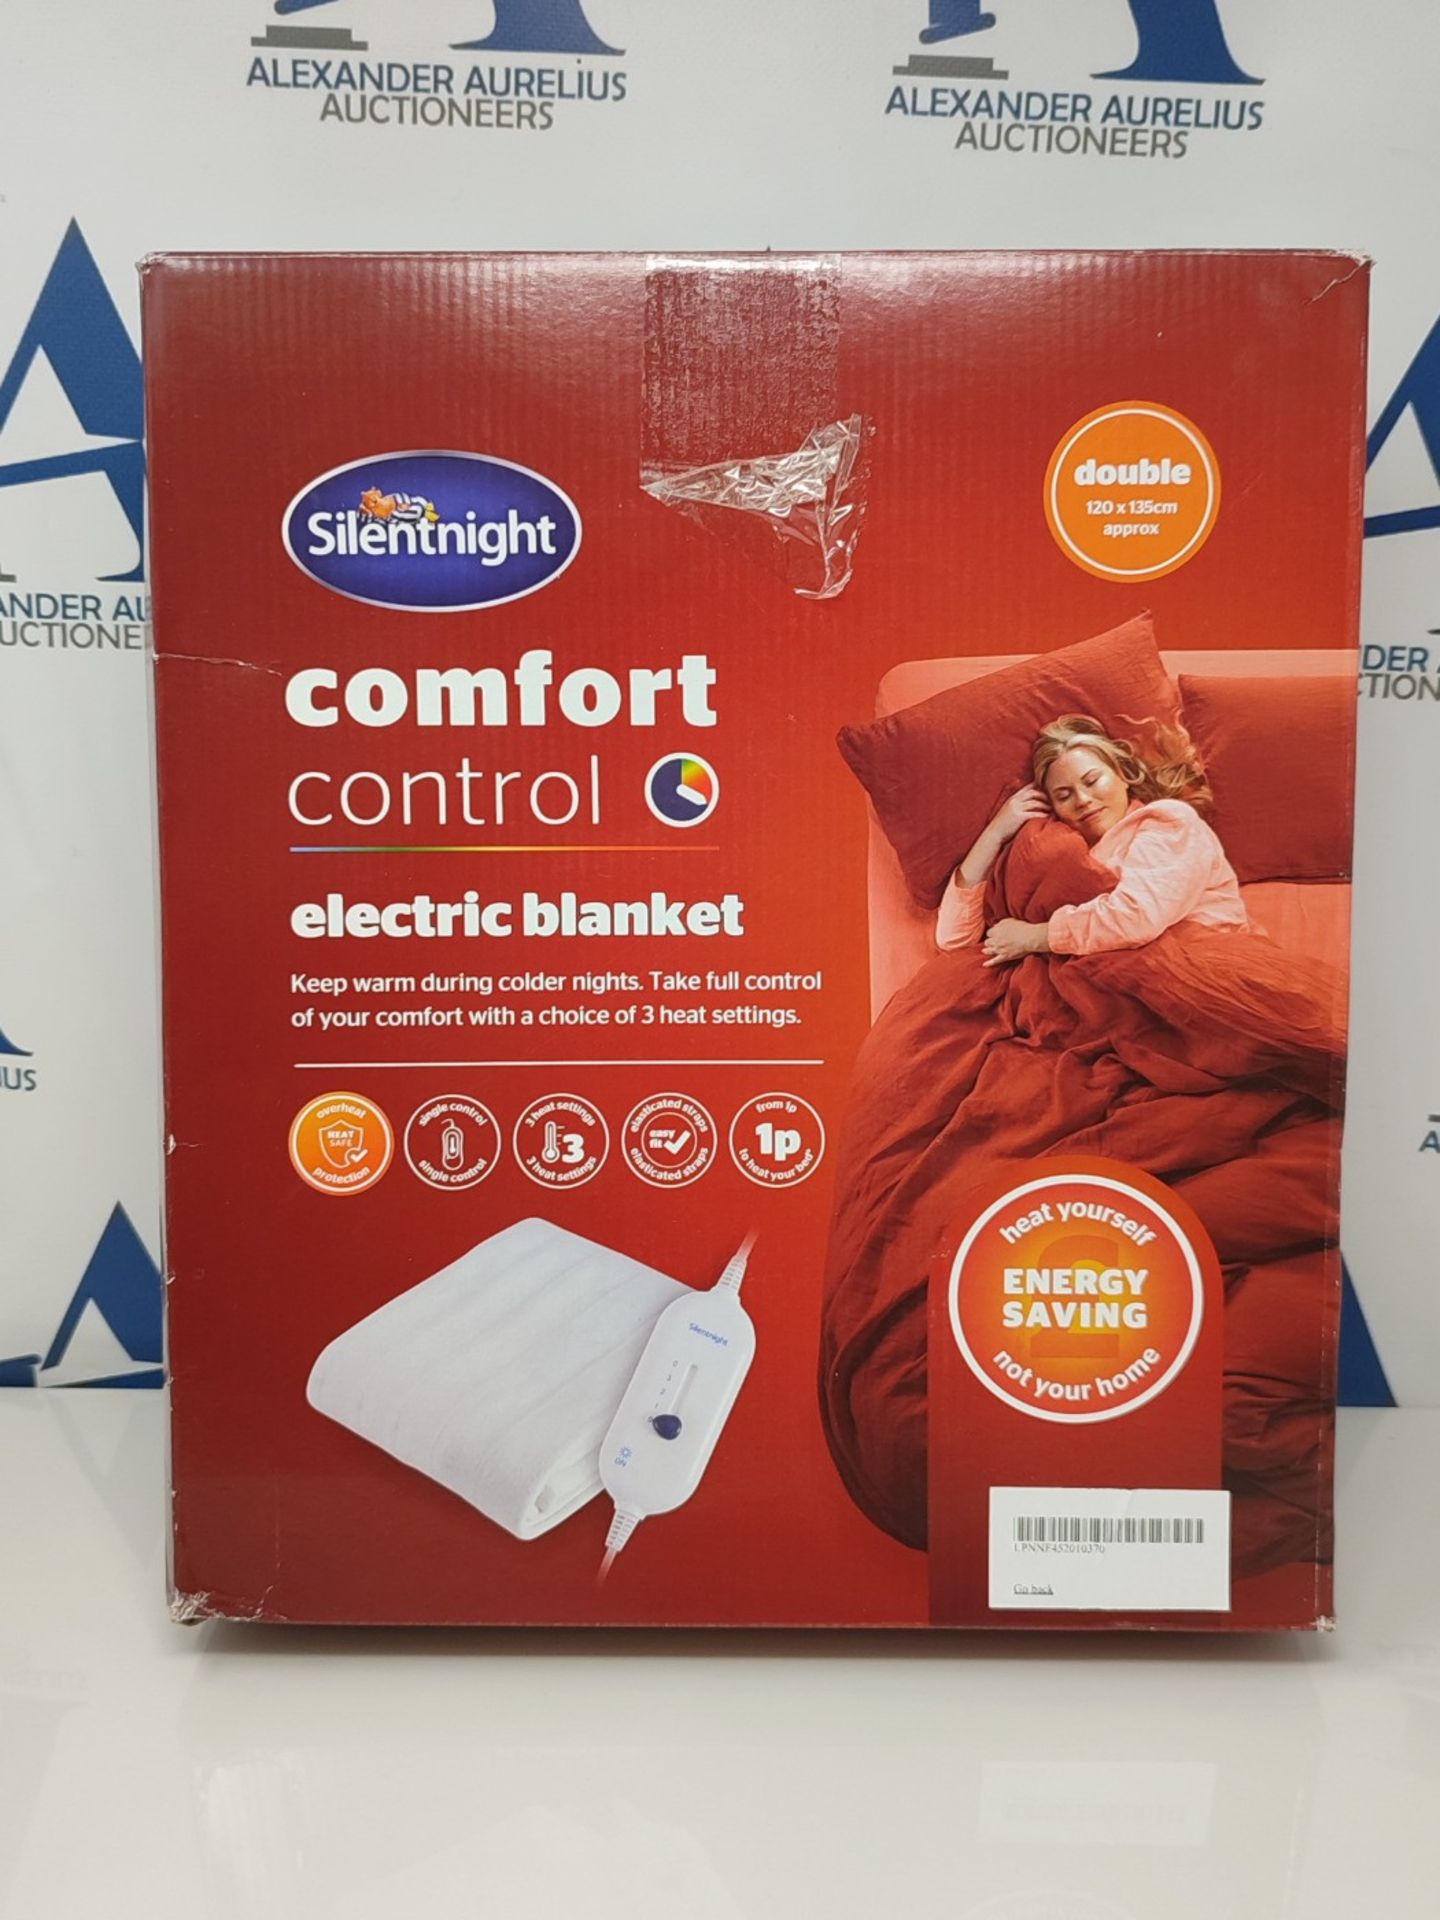 Silentnight Comfort Control Electric Blanket - Image 2 of 3